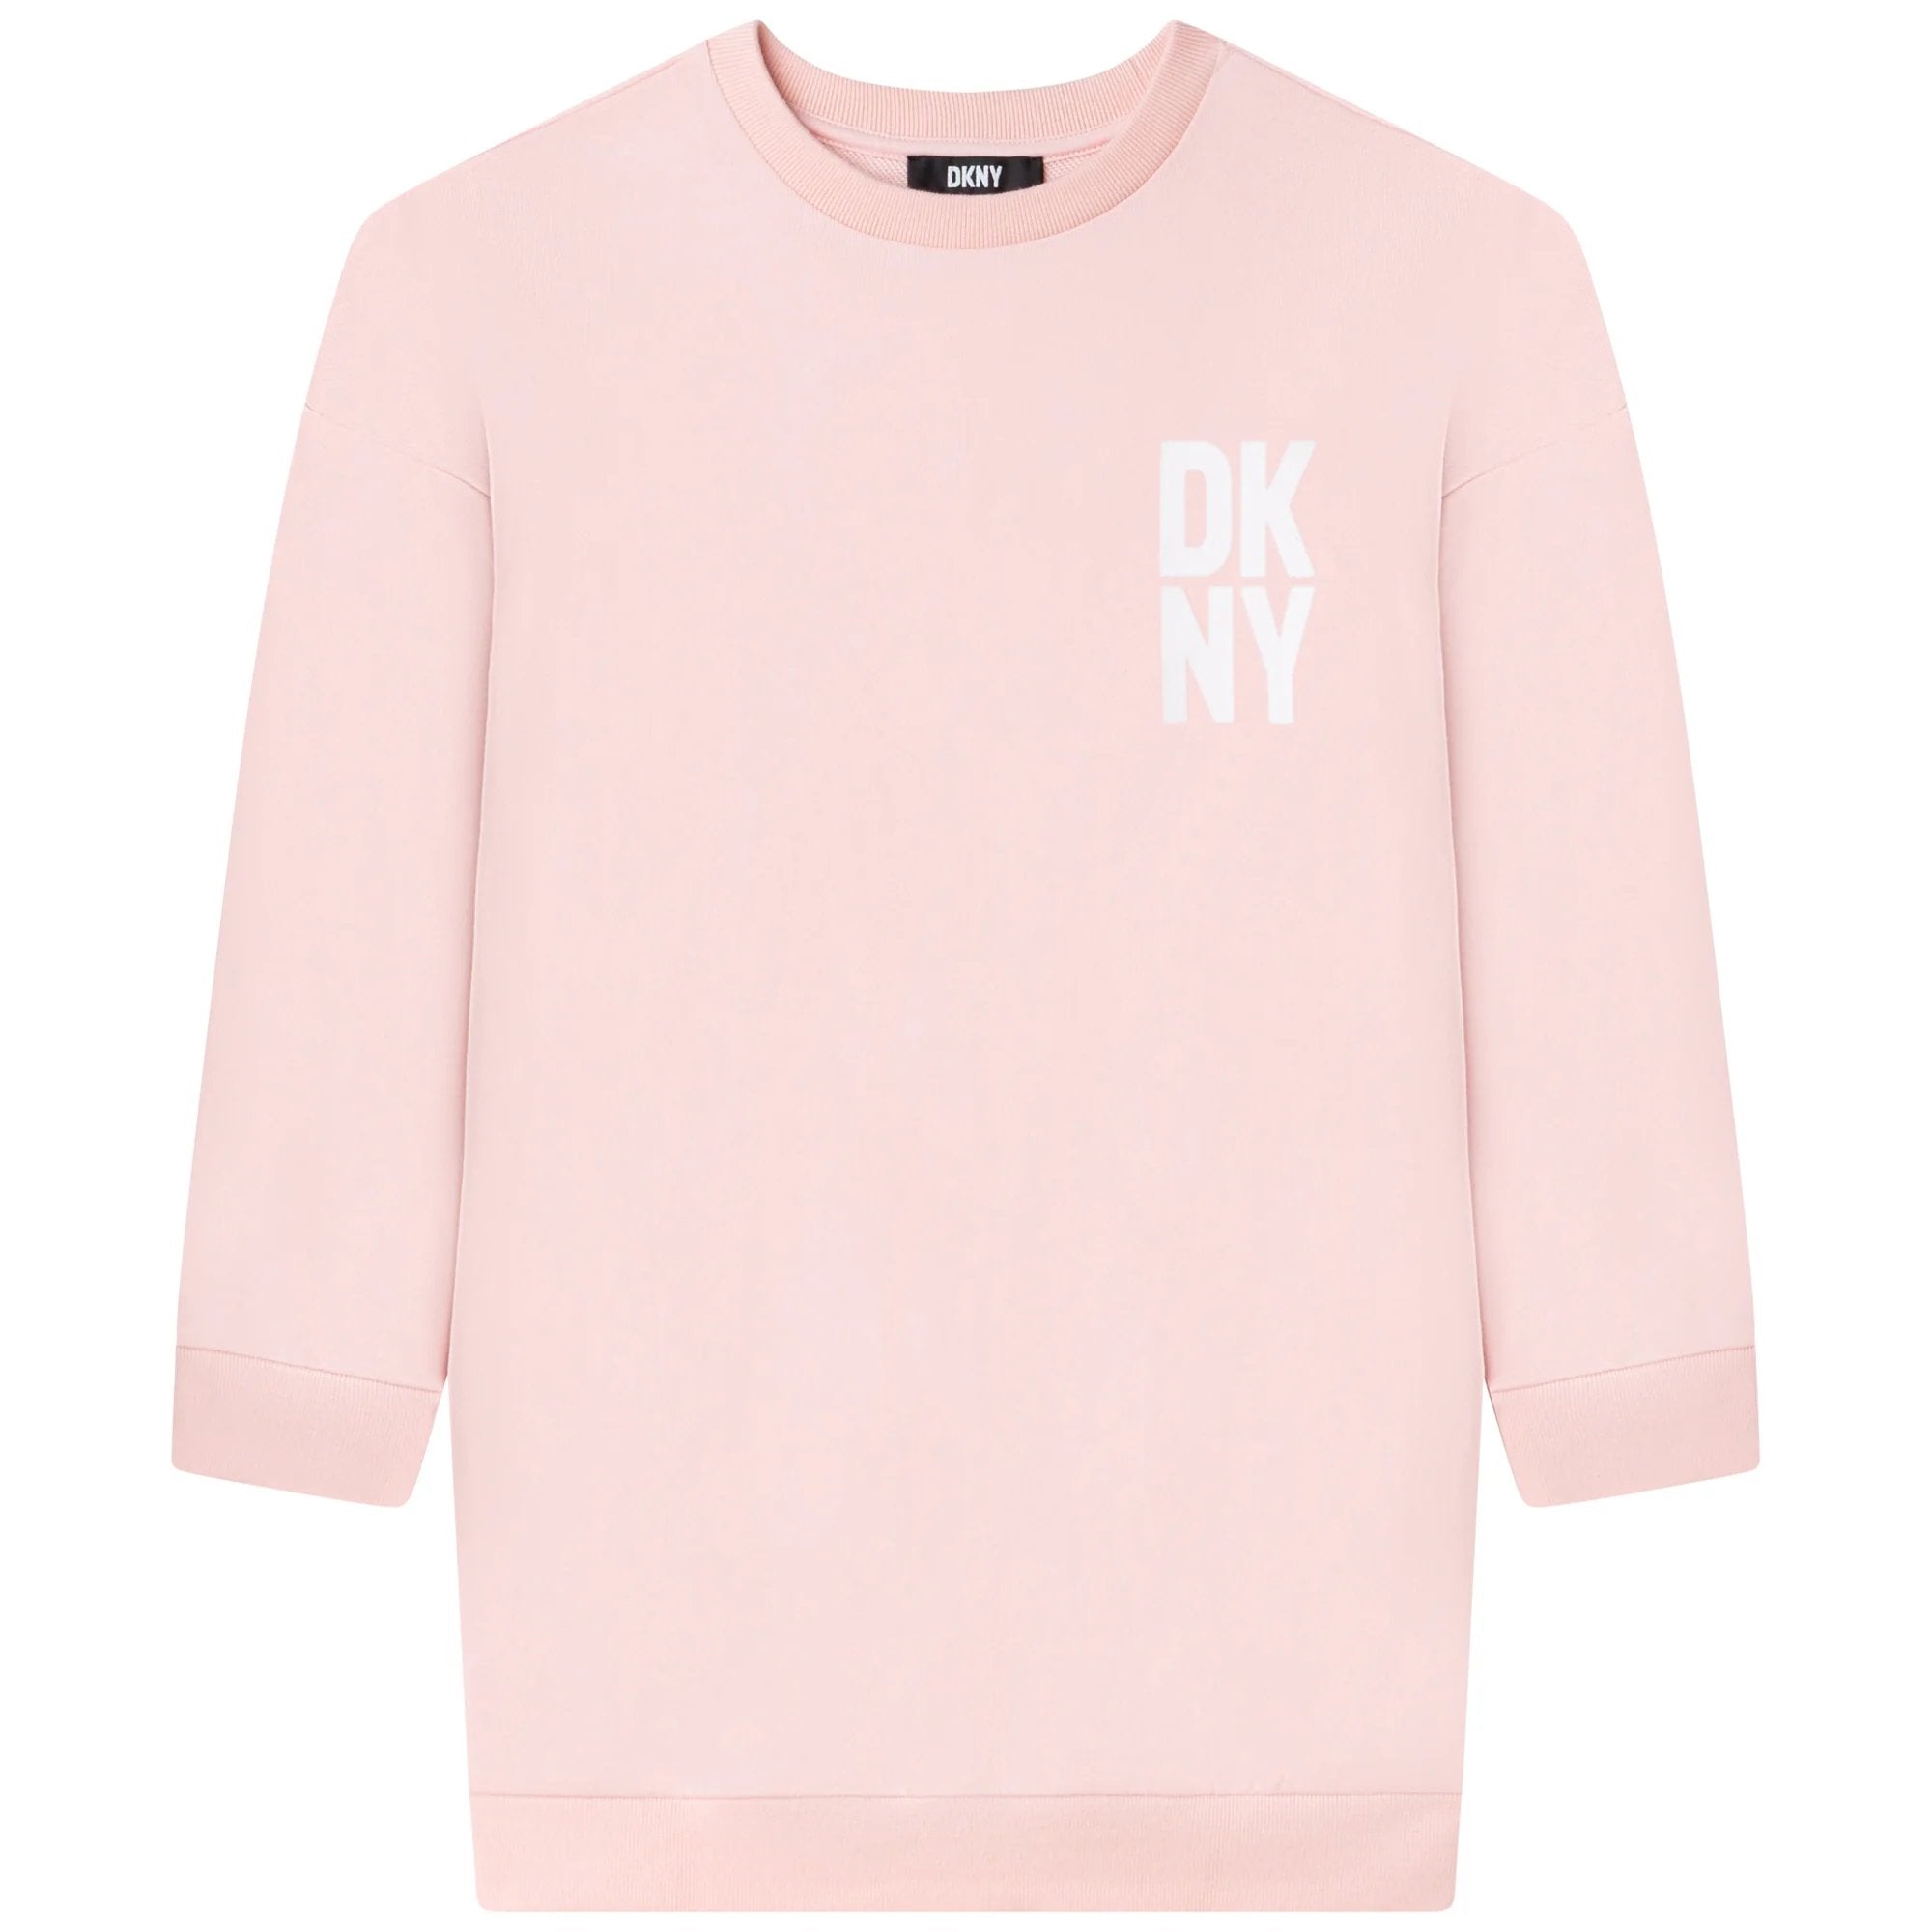 Dkny Girls Sweater Dress Pink 10Y